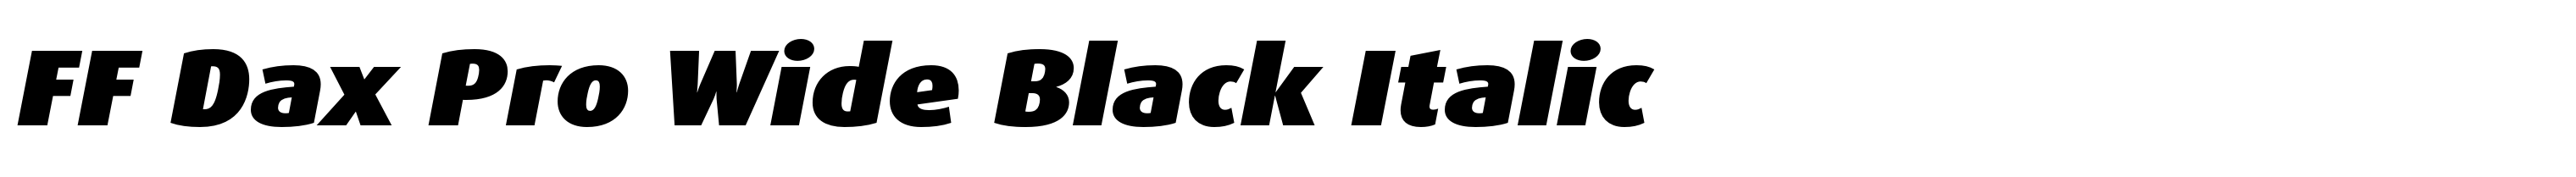 FF Dax Pro Wide Black Italic